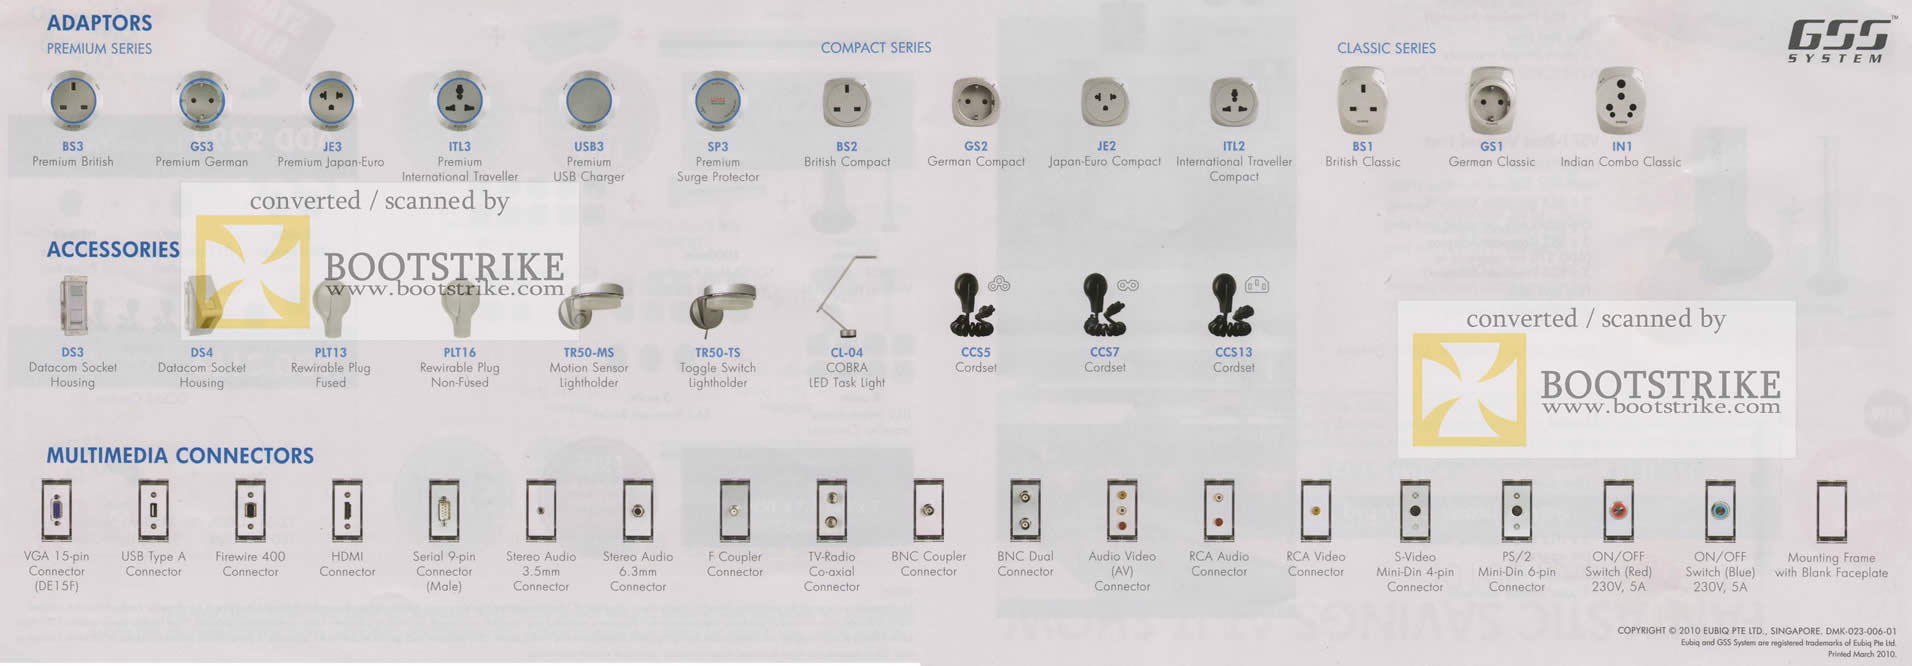 IT Show 2010 price list image brochure of Eubiq Adaptors Premium Compct Classic GSS System Accessories Multimedia Connectors